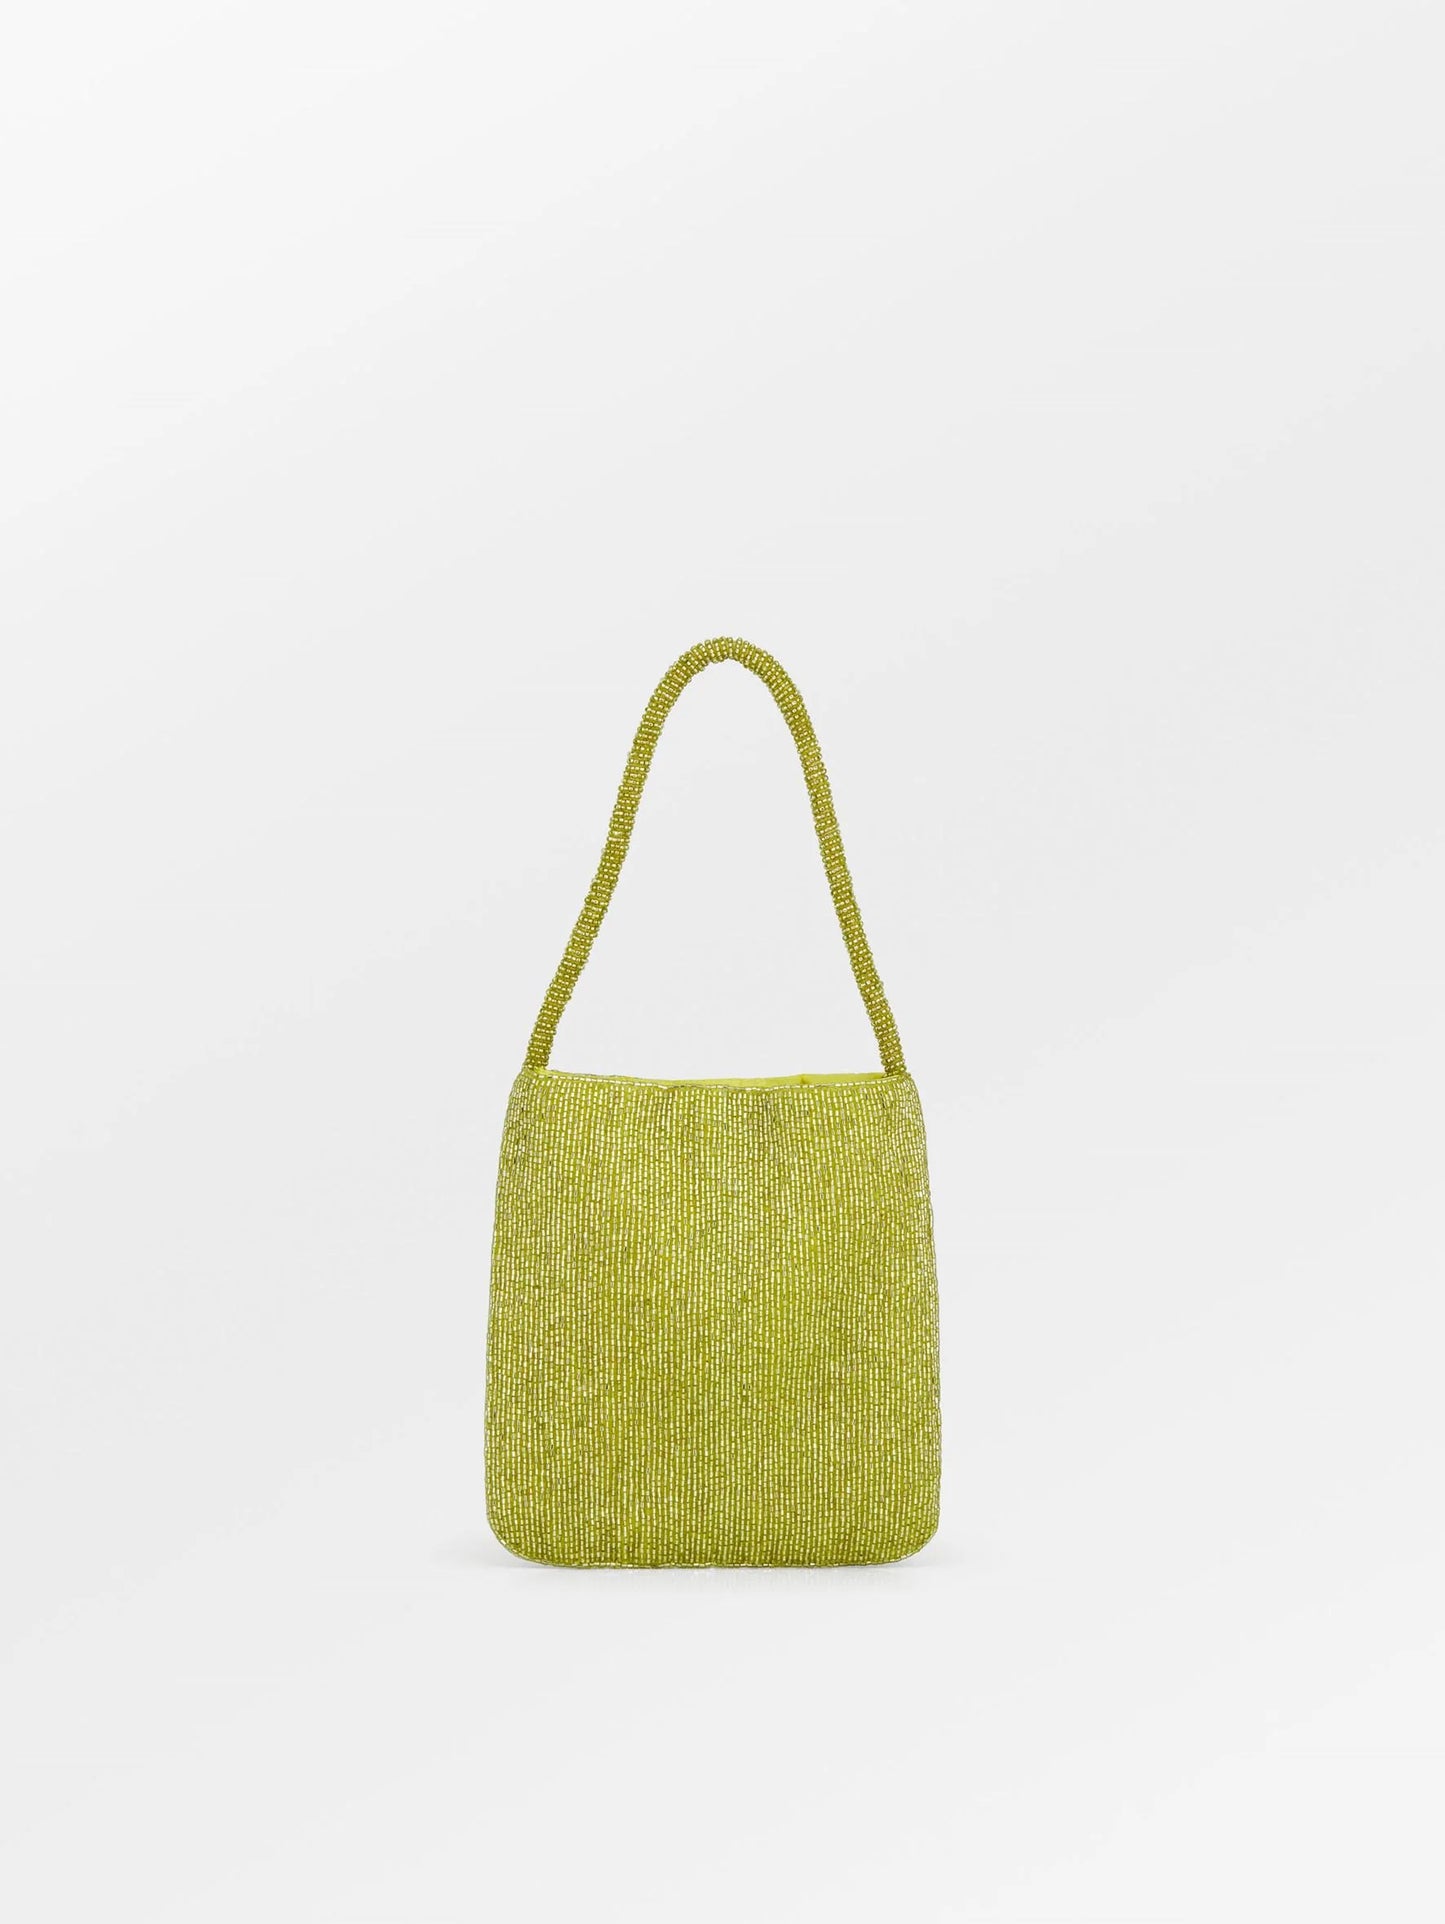 Glänzende Nyra Tasche limade grün